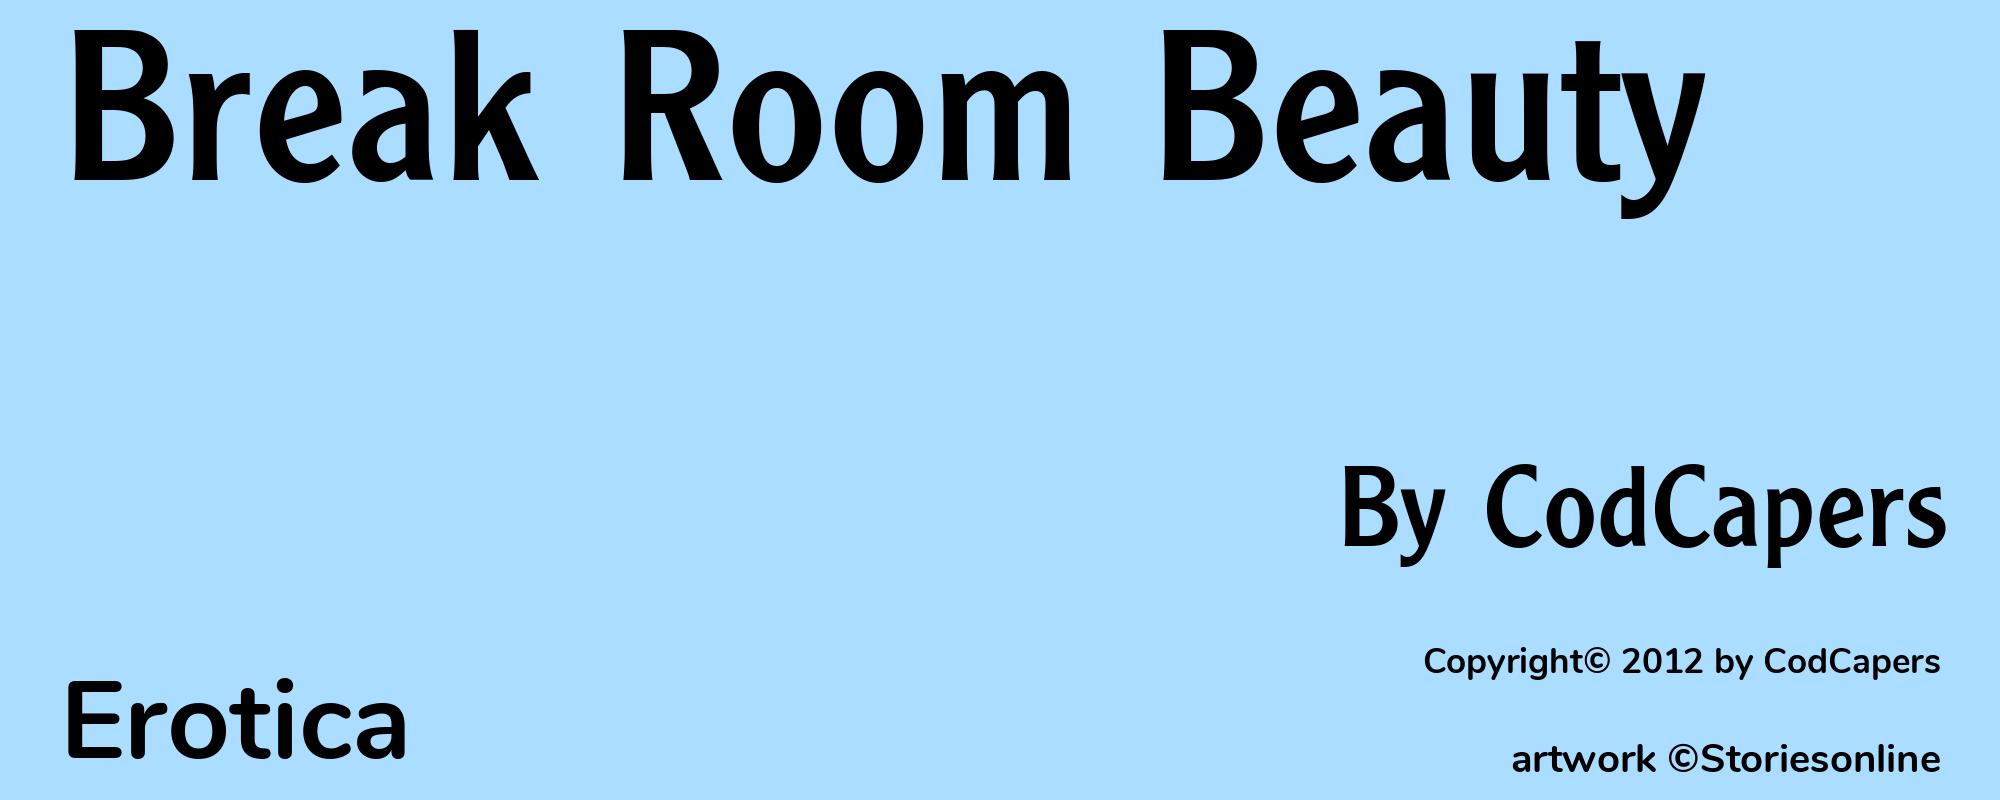 Break Room Beauty - Cover